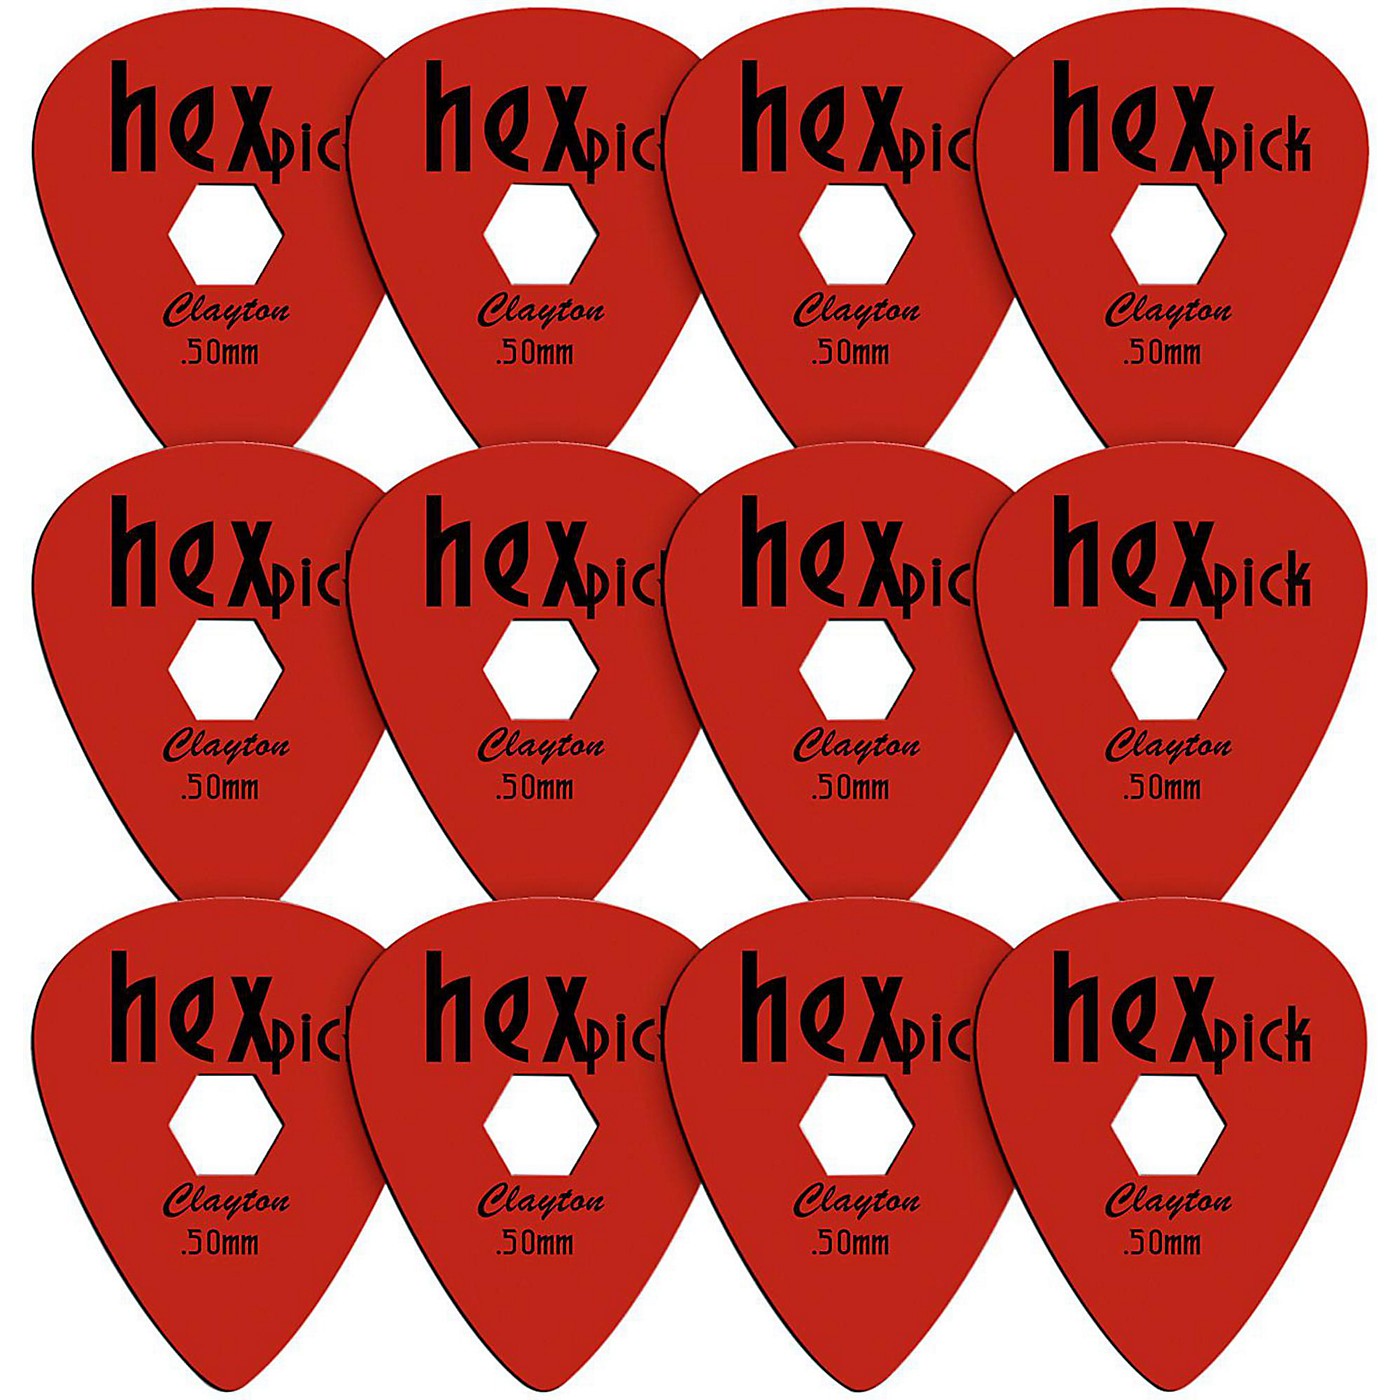 Clayton HexPick Guitar Picks - 12-Pack thumbnail